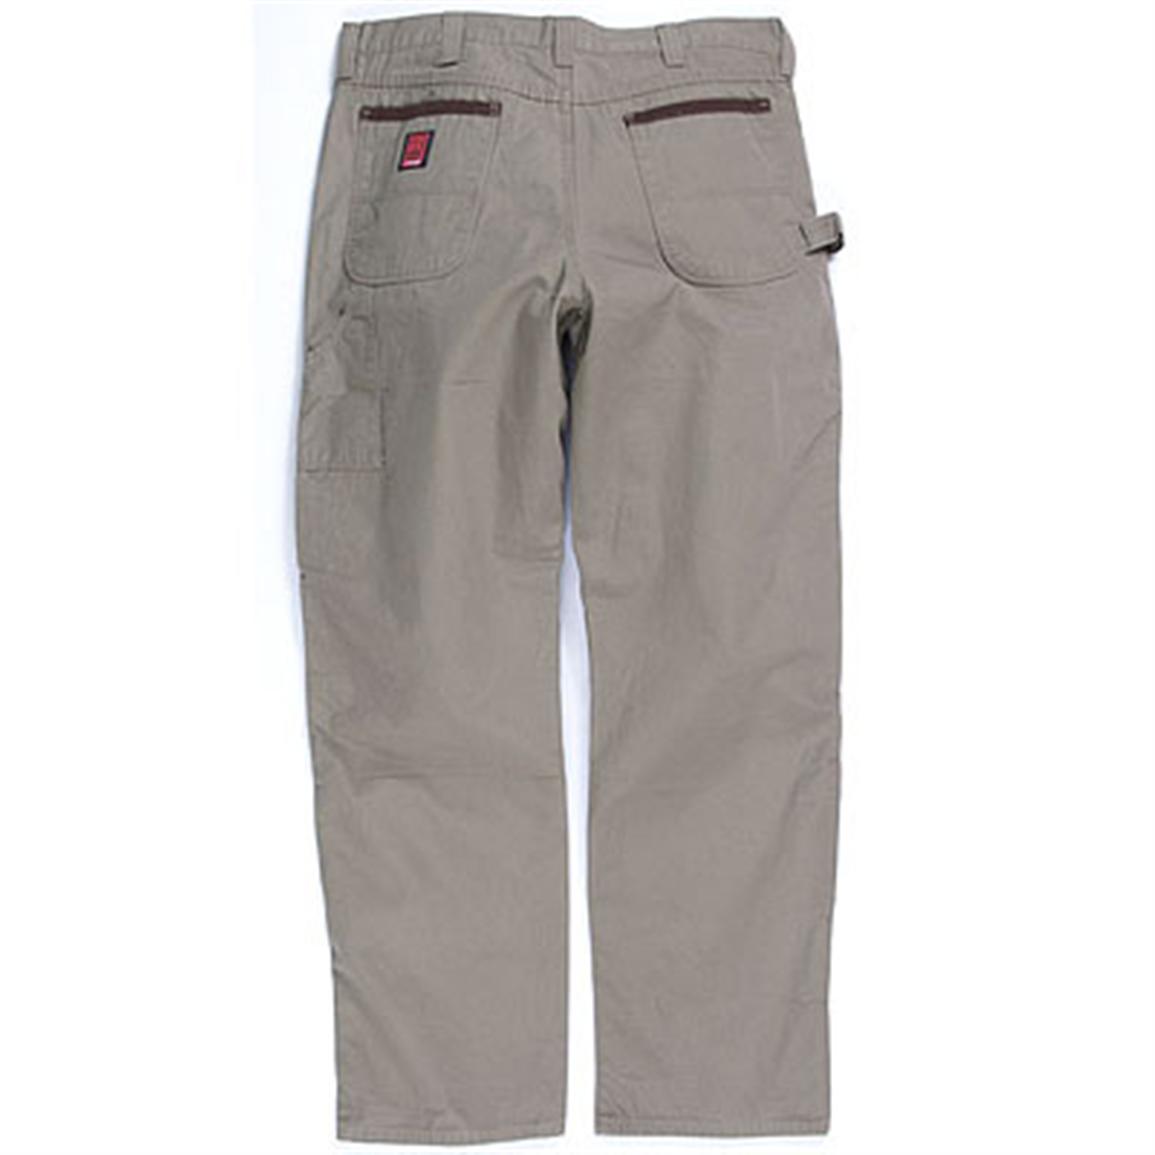 Men's Wrangler® Carpenter Jeans - 226905, Jeans & Pants at Sportsman's ...